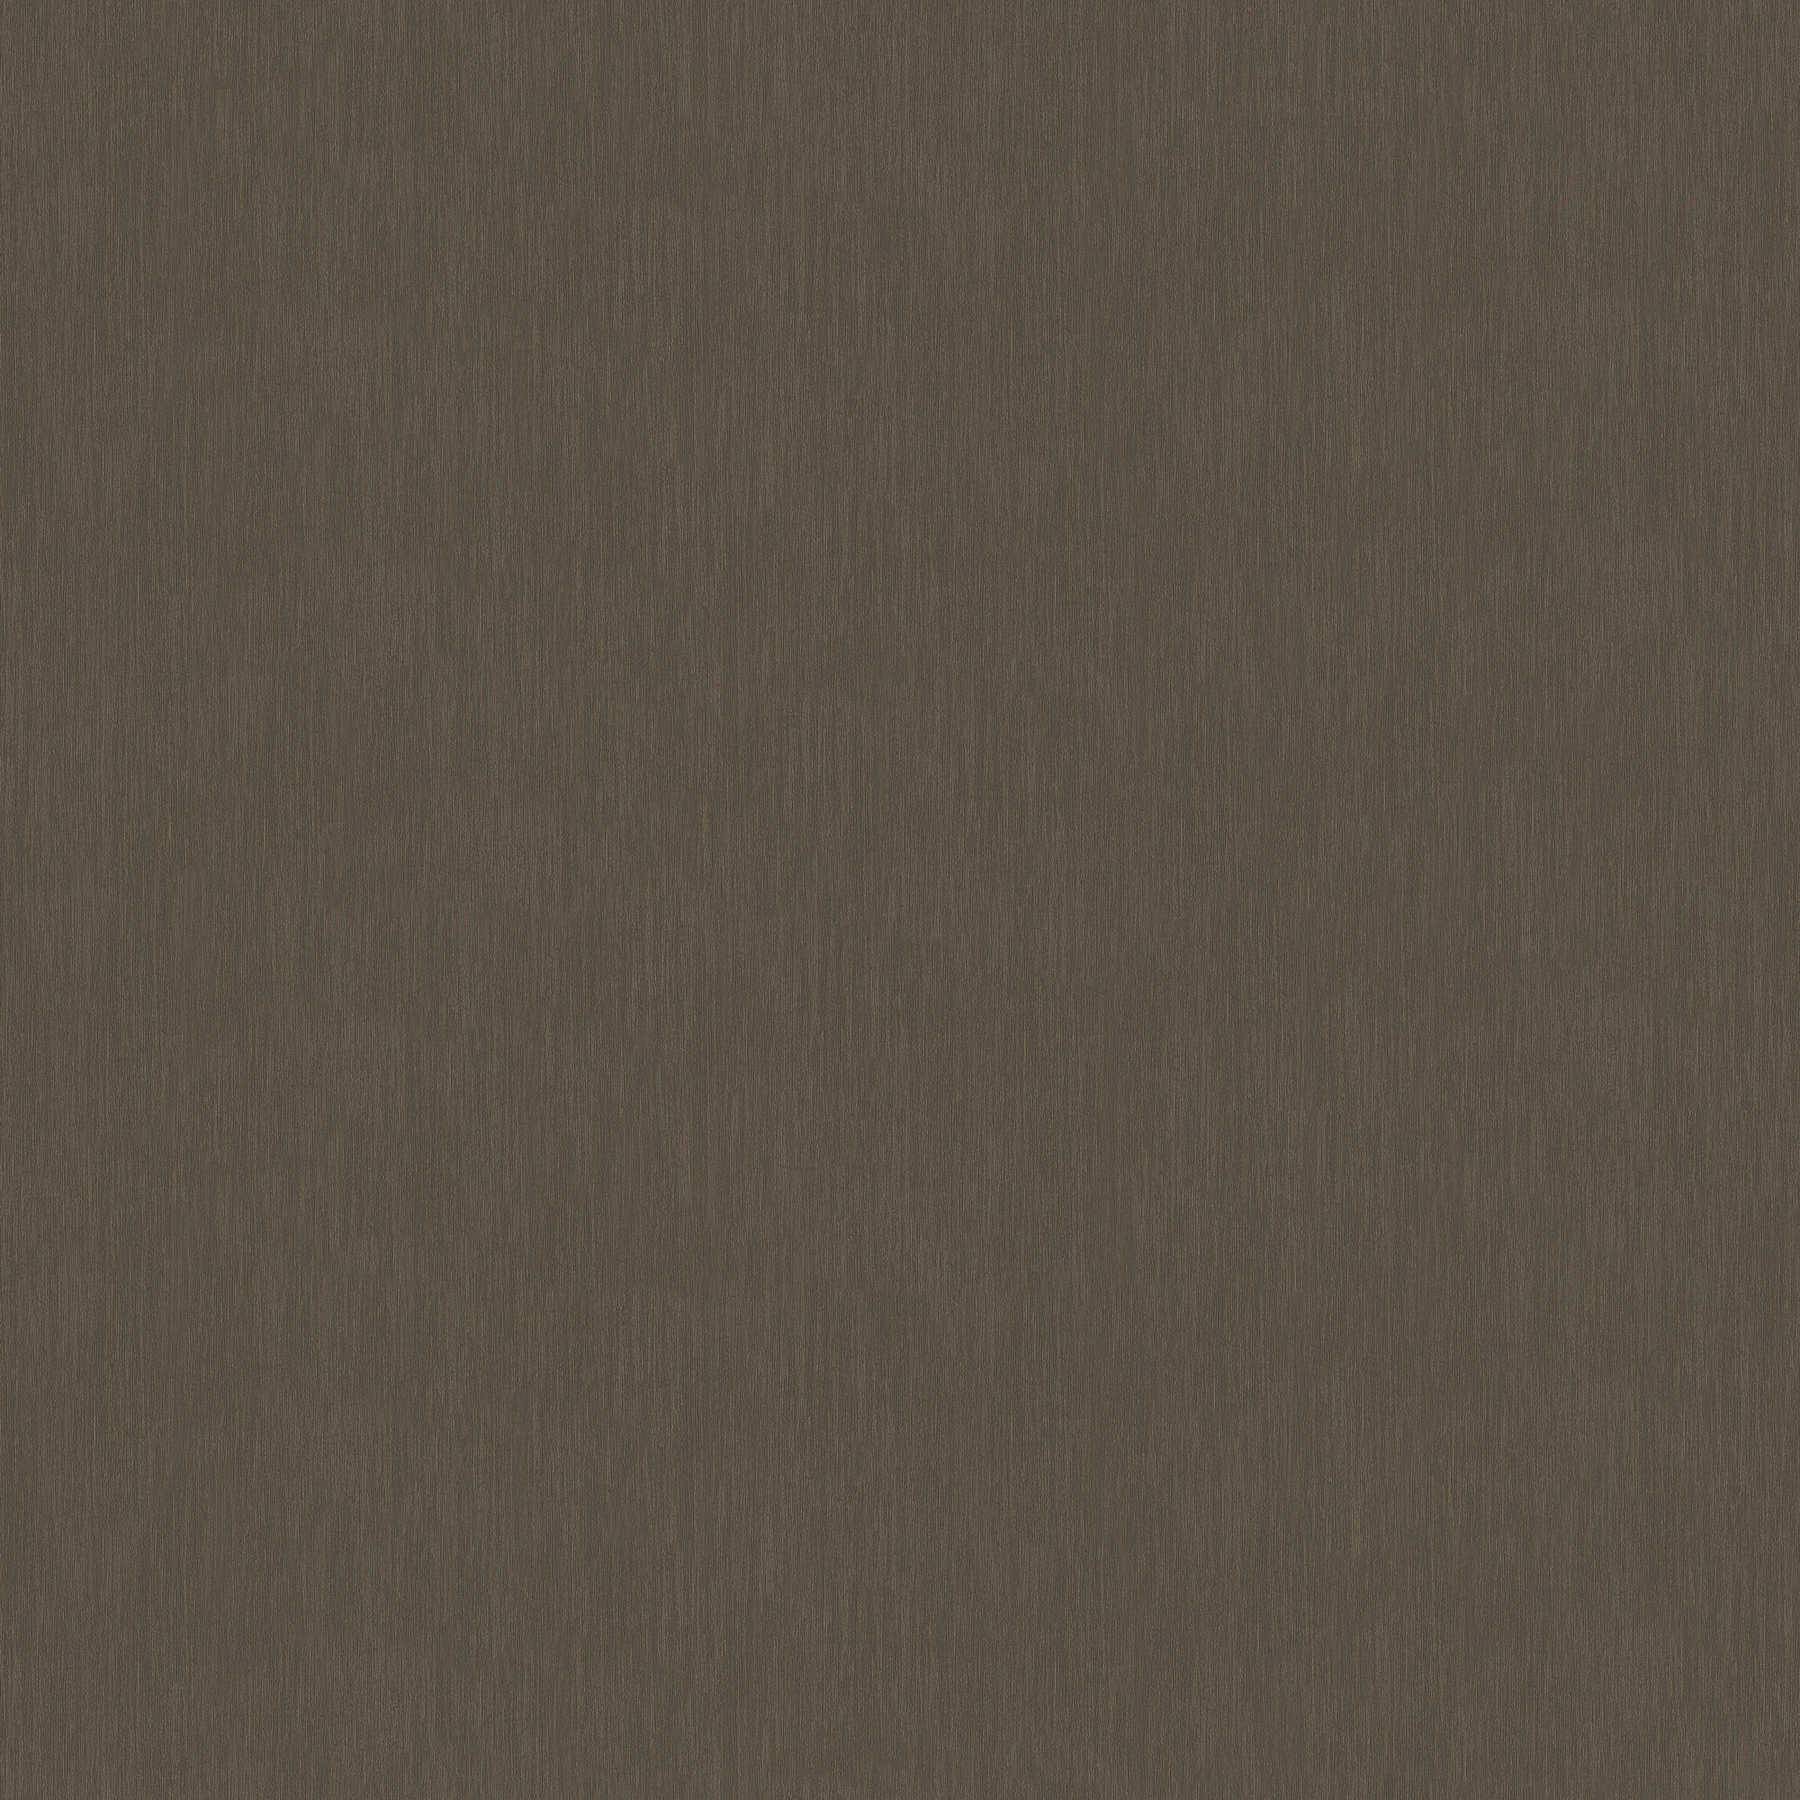 Premium non-woven wallpaper plain, satin - brown
